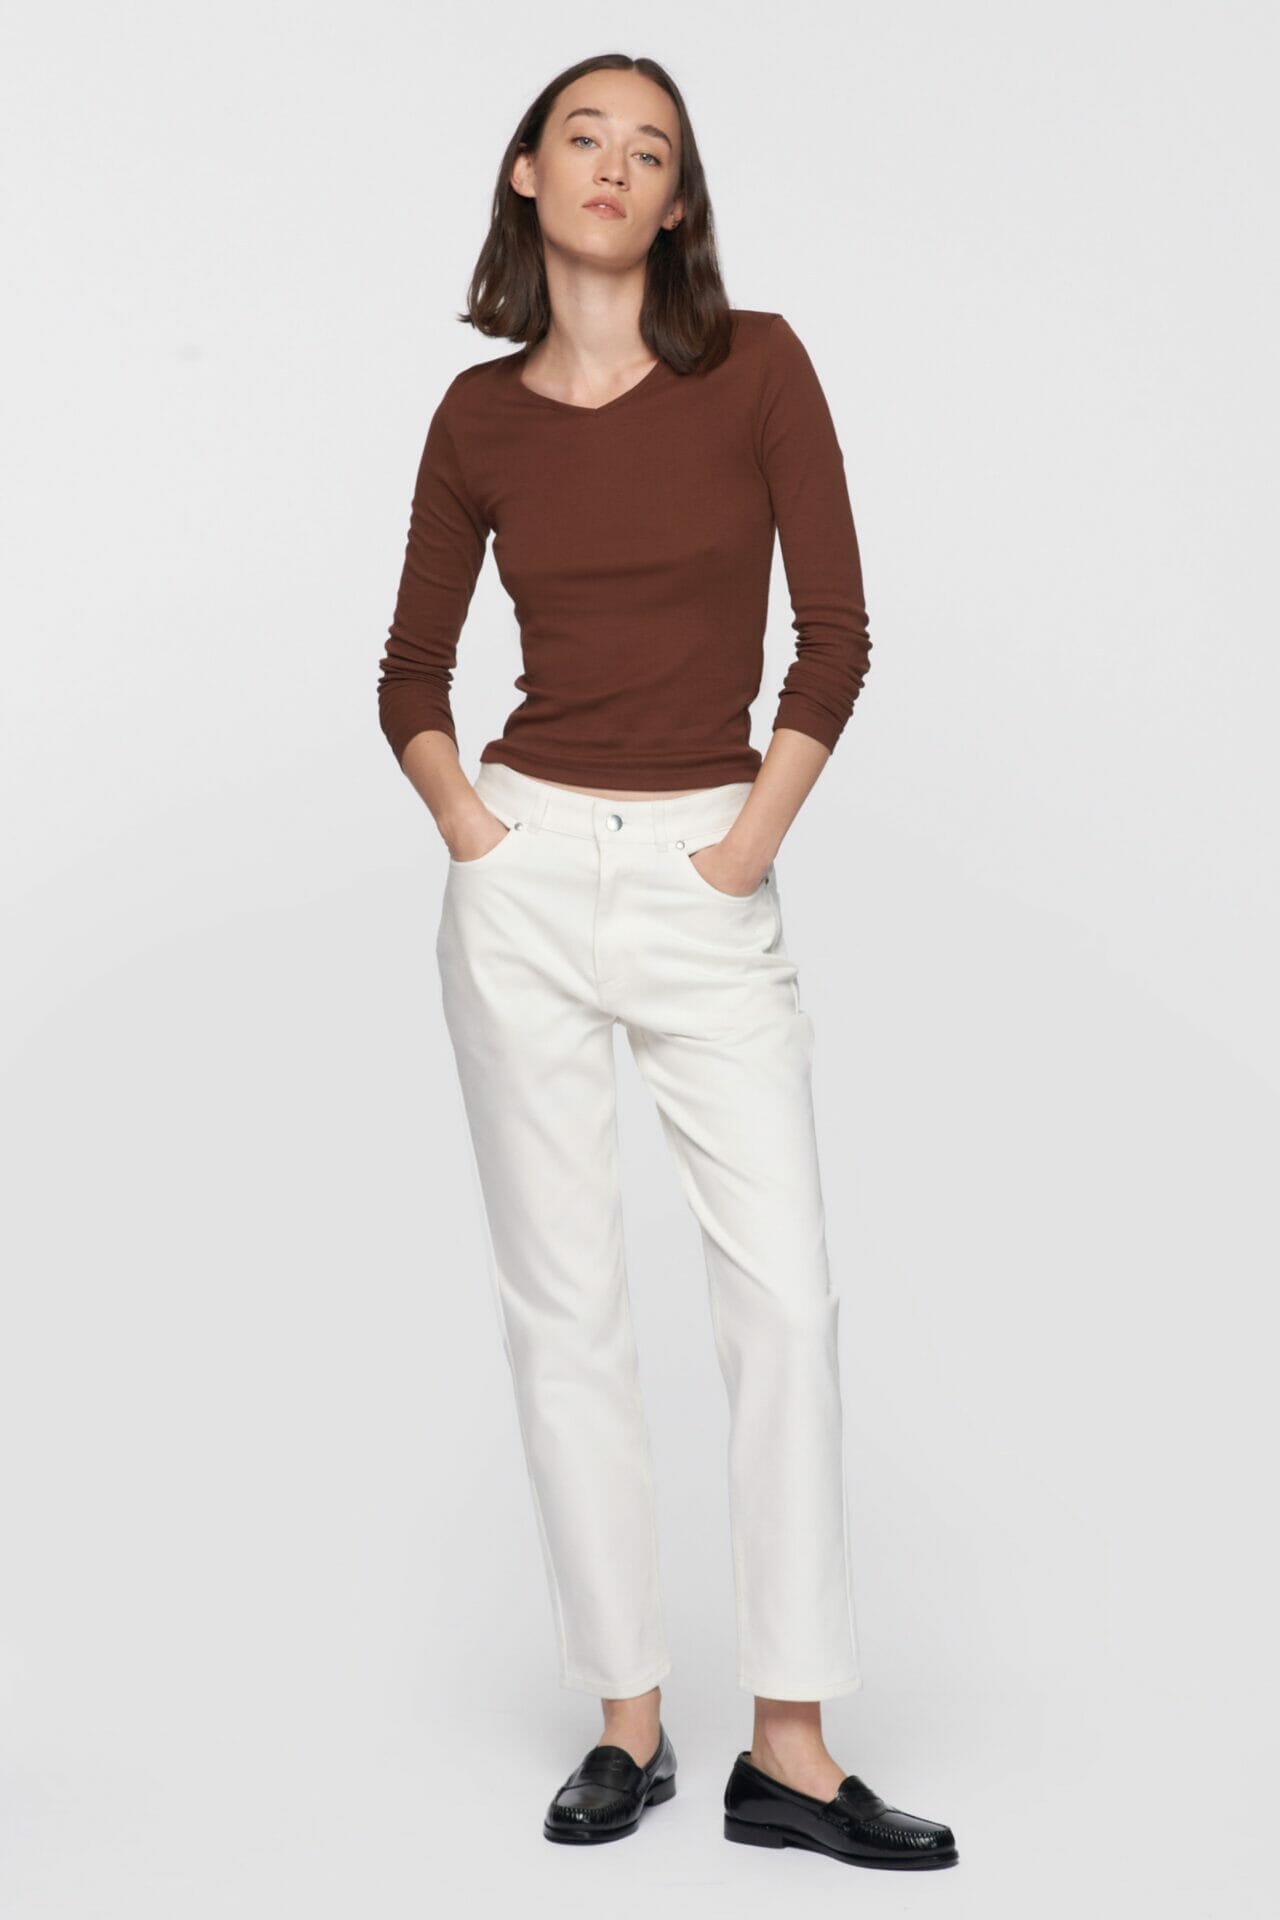 Kotn Women's Graduate Taper Trouser Pants in Natural White | Eco-Stylist